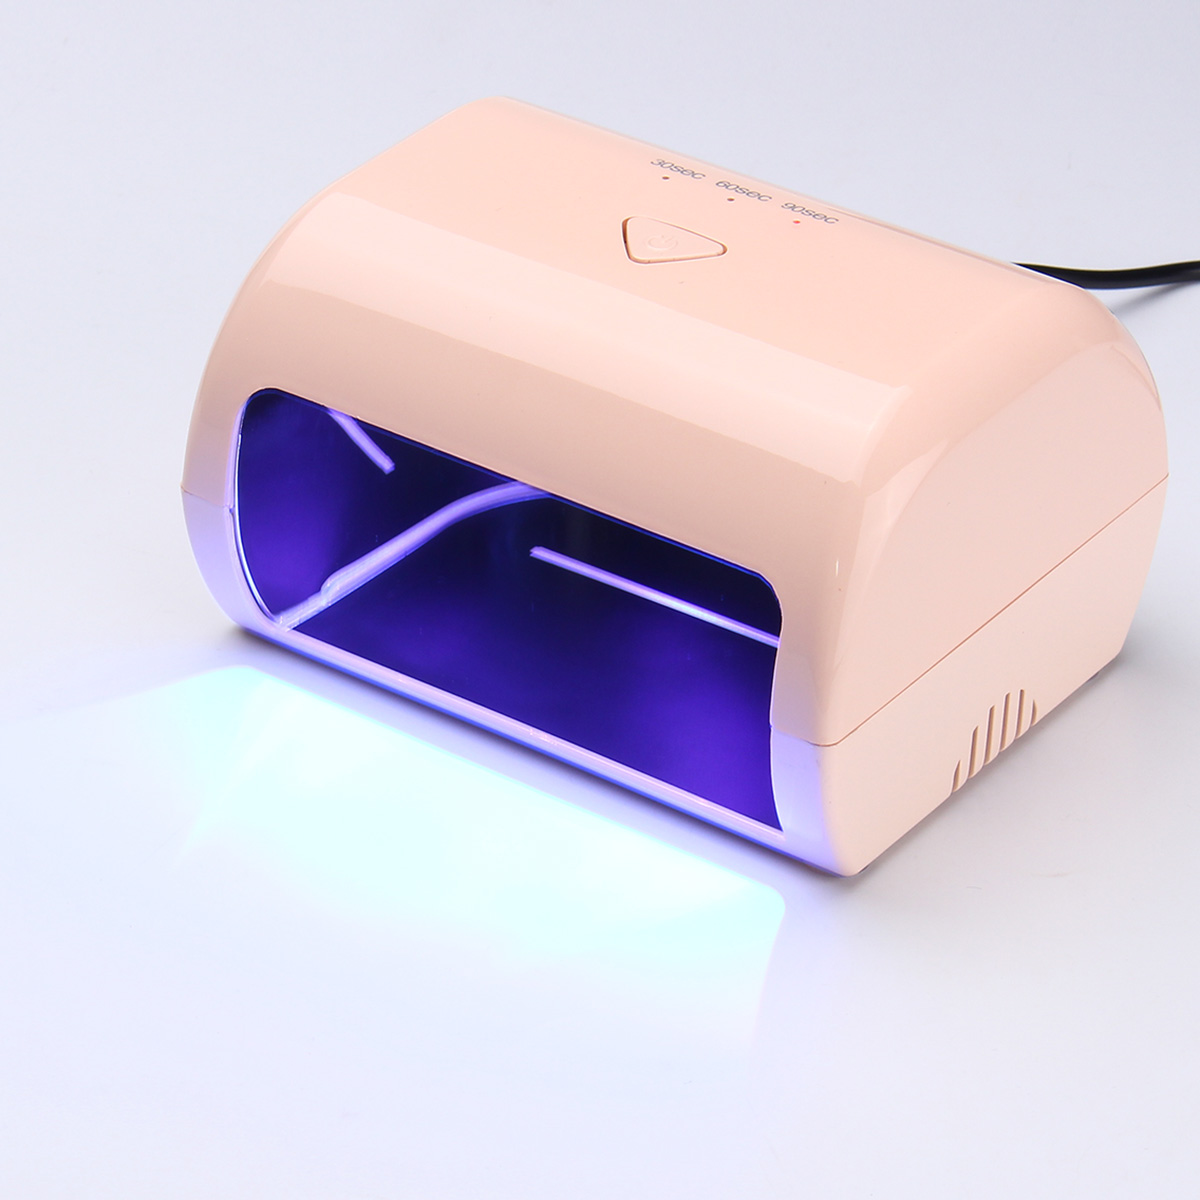 9W-LED-UV-Lamp-Nail-Art-Dryer-Machine-Gel-Polish-Curing-Manicure-Pedicure-Salon-Tools-110-240V-1293988